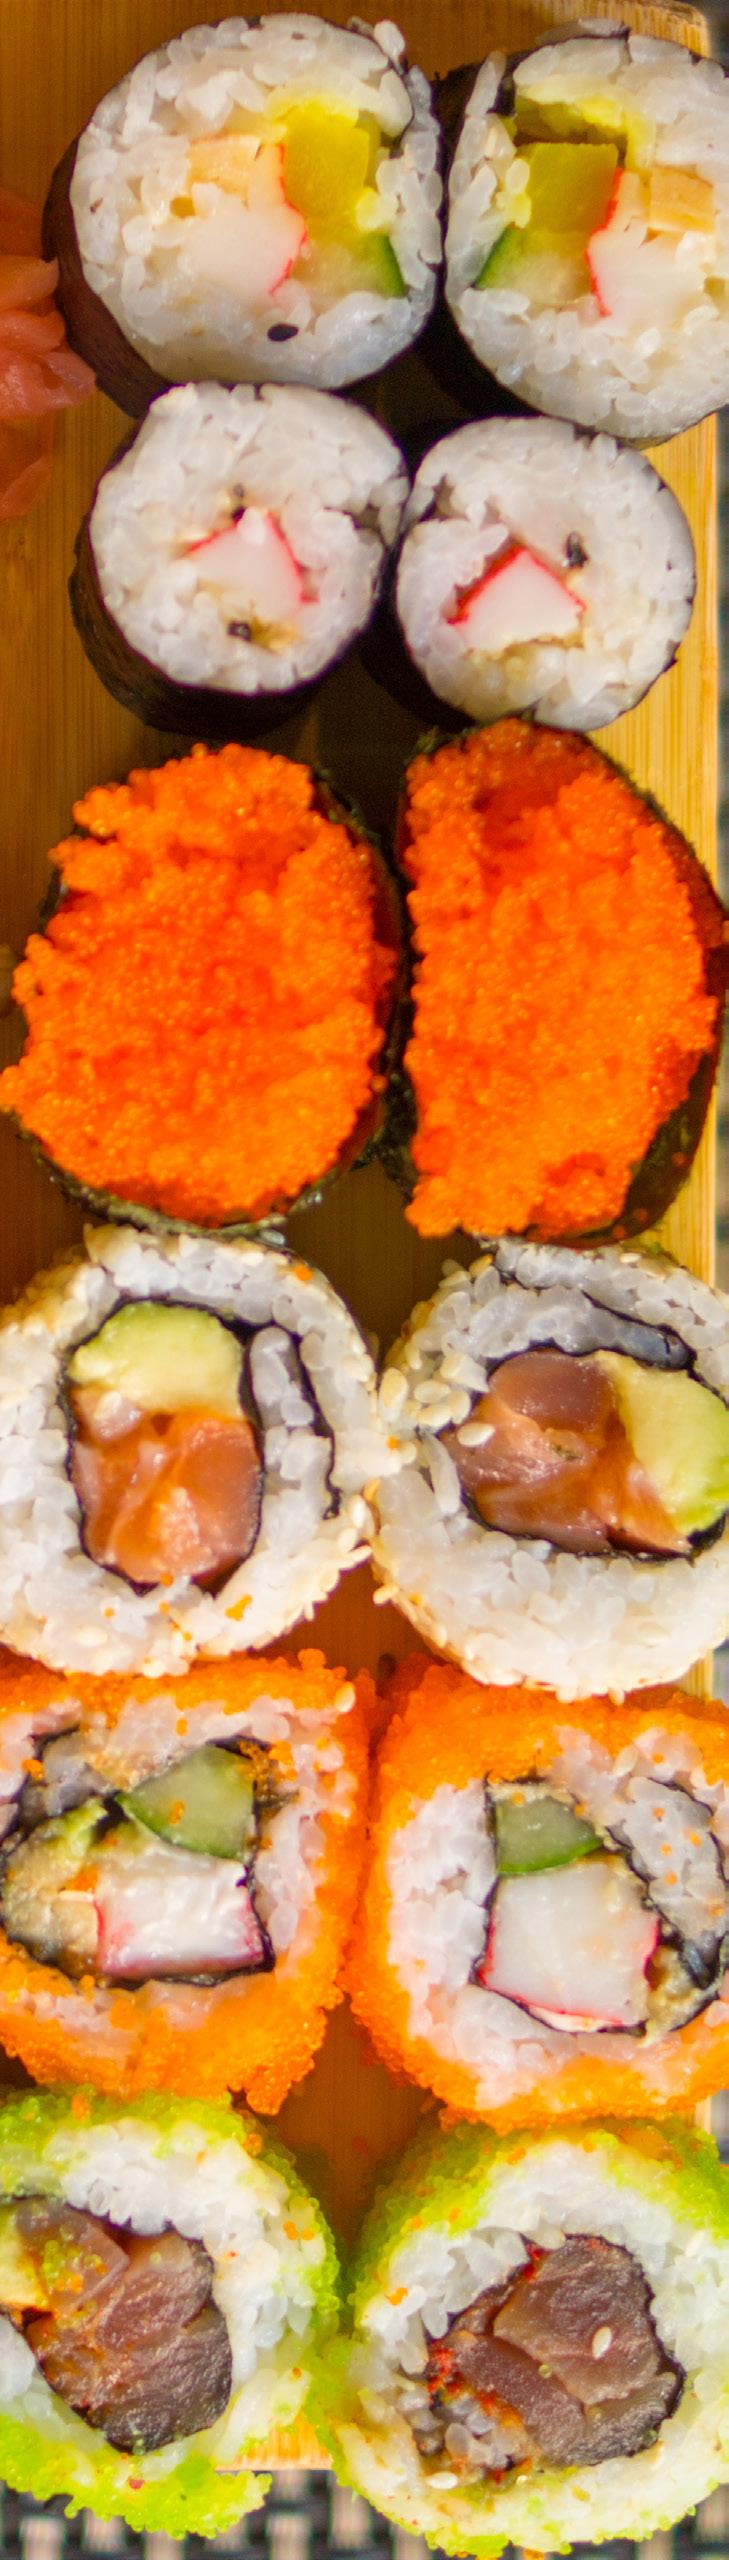 CONER OFFICE SPECIALTIES Sushi $1.